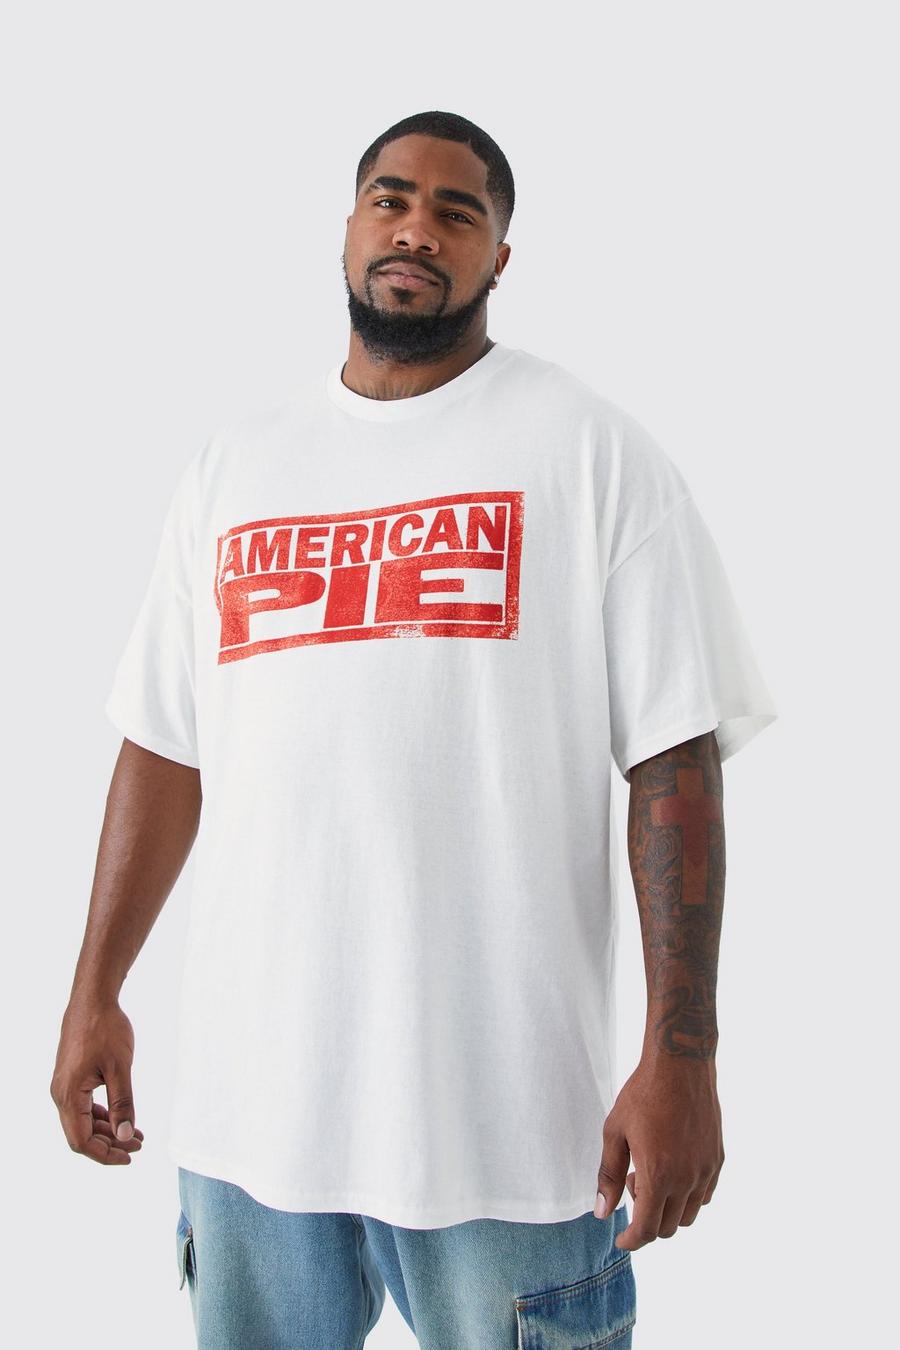 T-shirt Plus Size ufficiale American Pie, White blanco